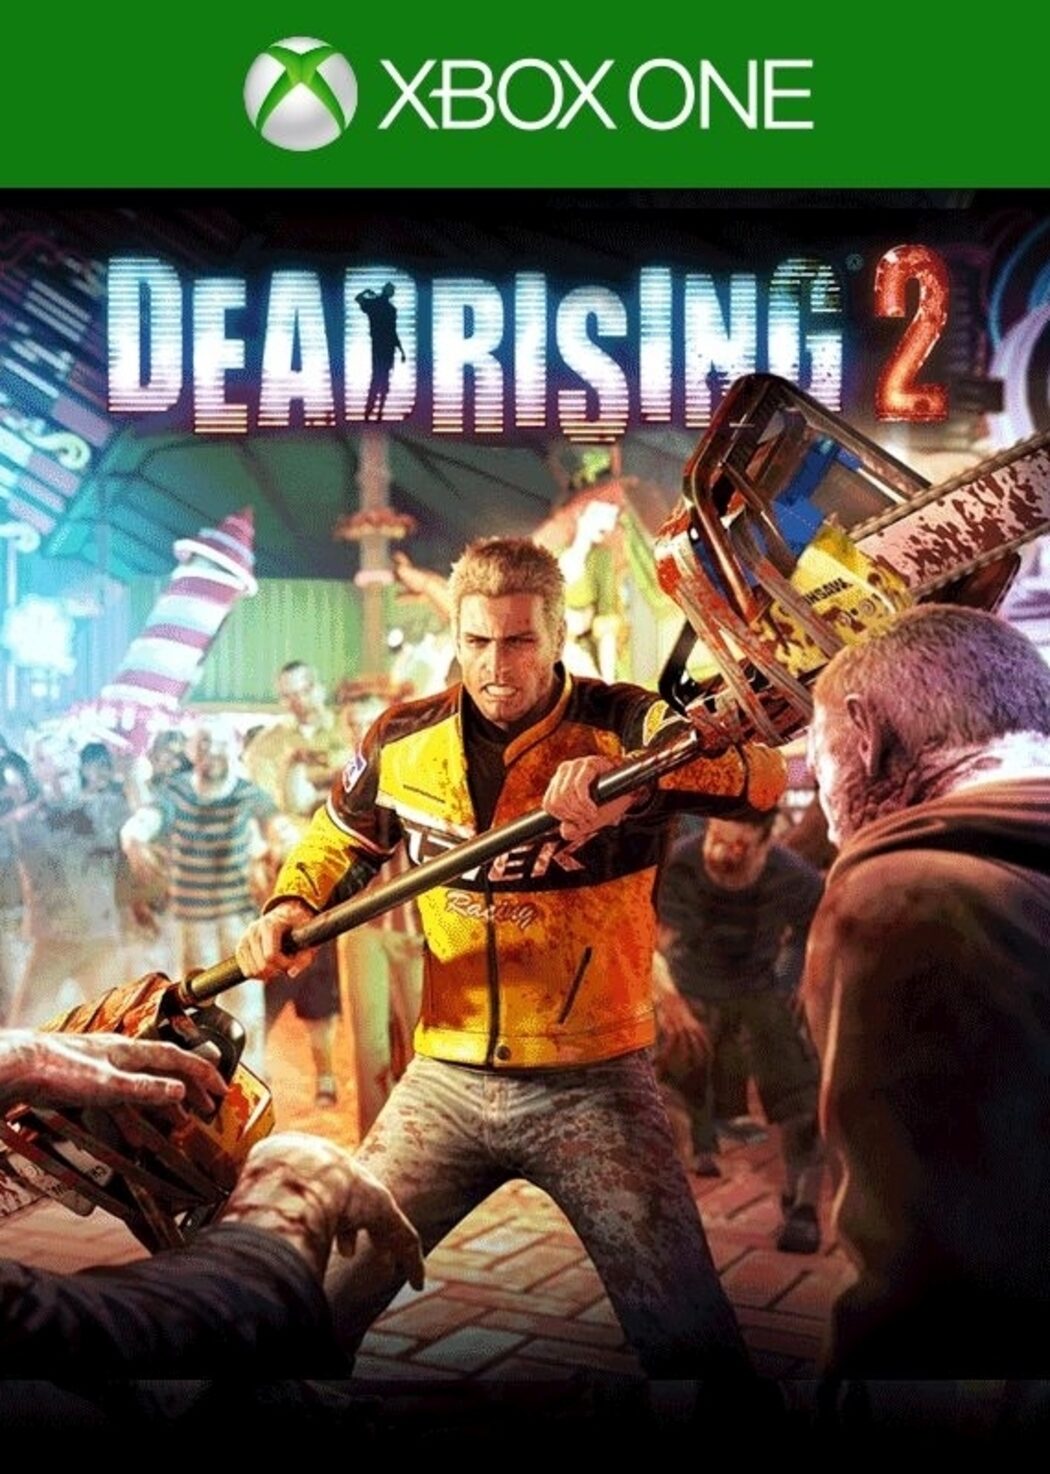 Buy Dead Rising 2 Steam CD Key for a Cheaper Price!